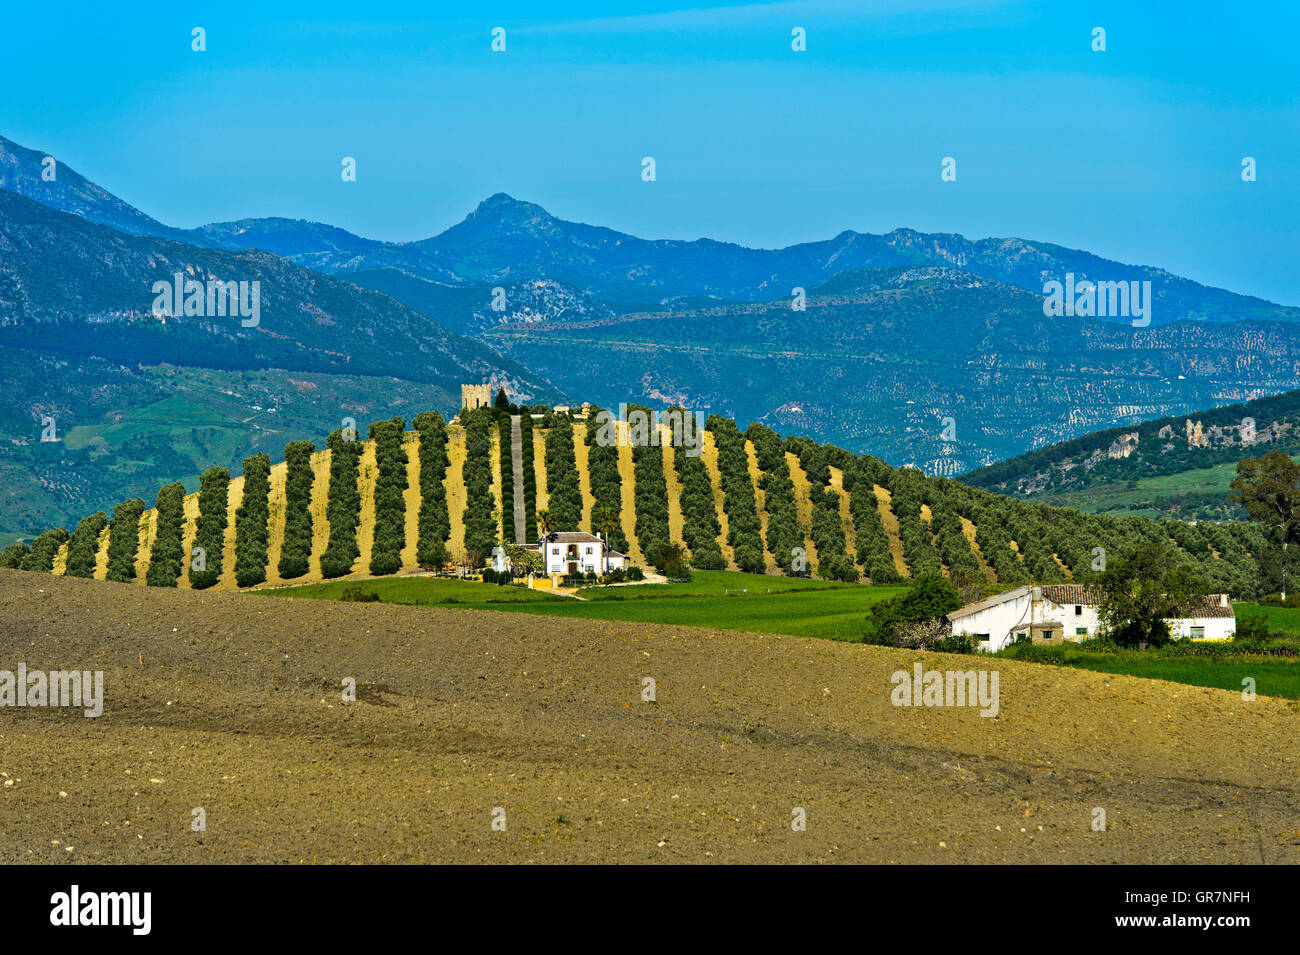 Farm House, Finca, Beneath An Olive Grove On A Hill, Andalusia, Spain Stock Photo